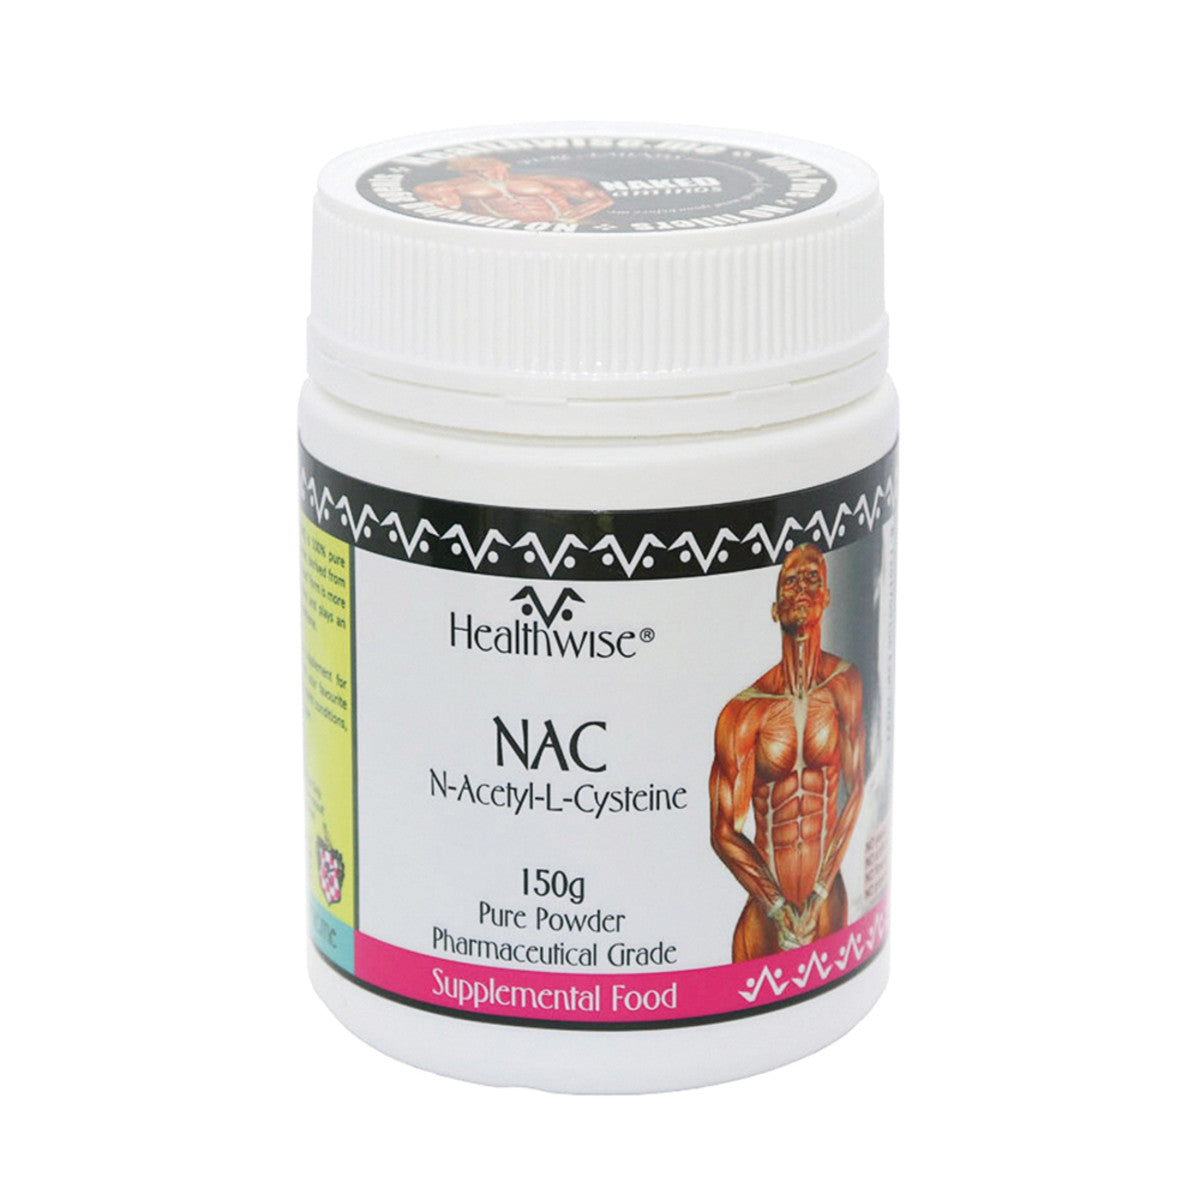 Healthwise NAC N-Acetyl-L-Cysteine 150g Powder